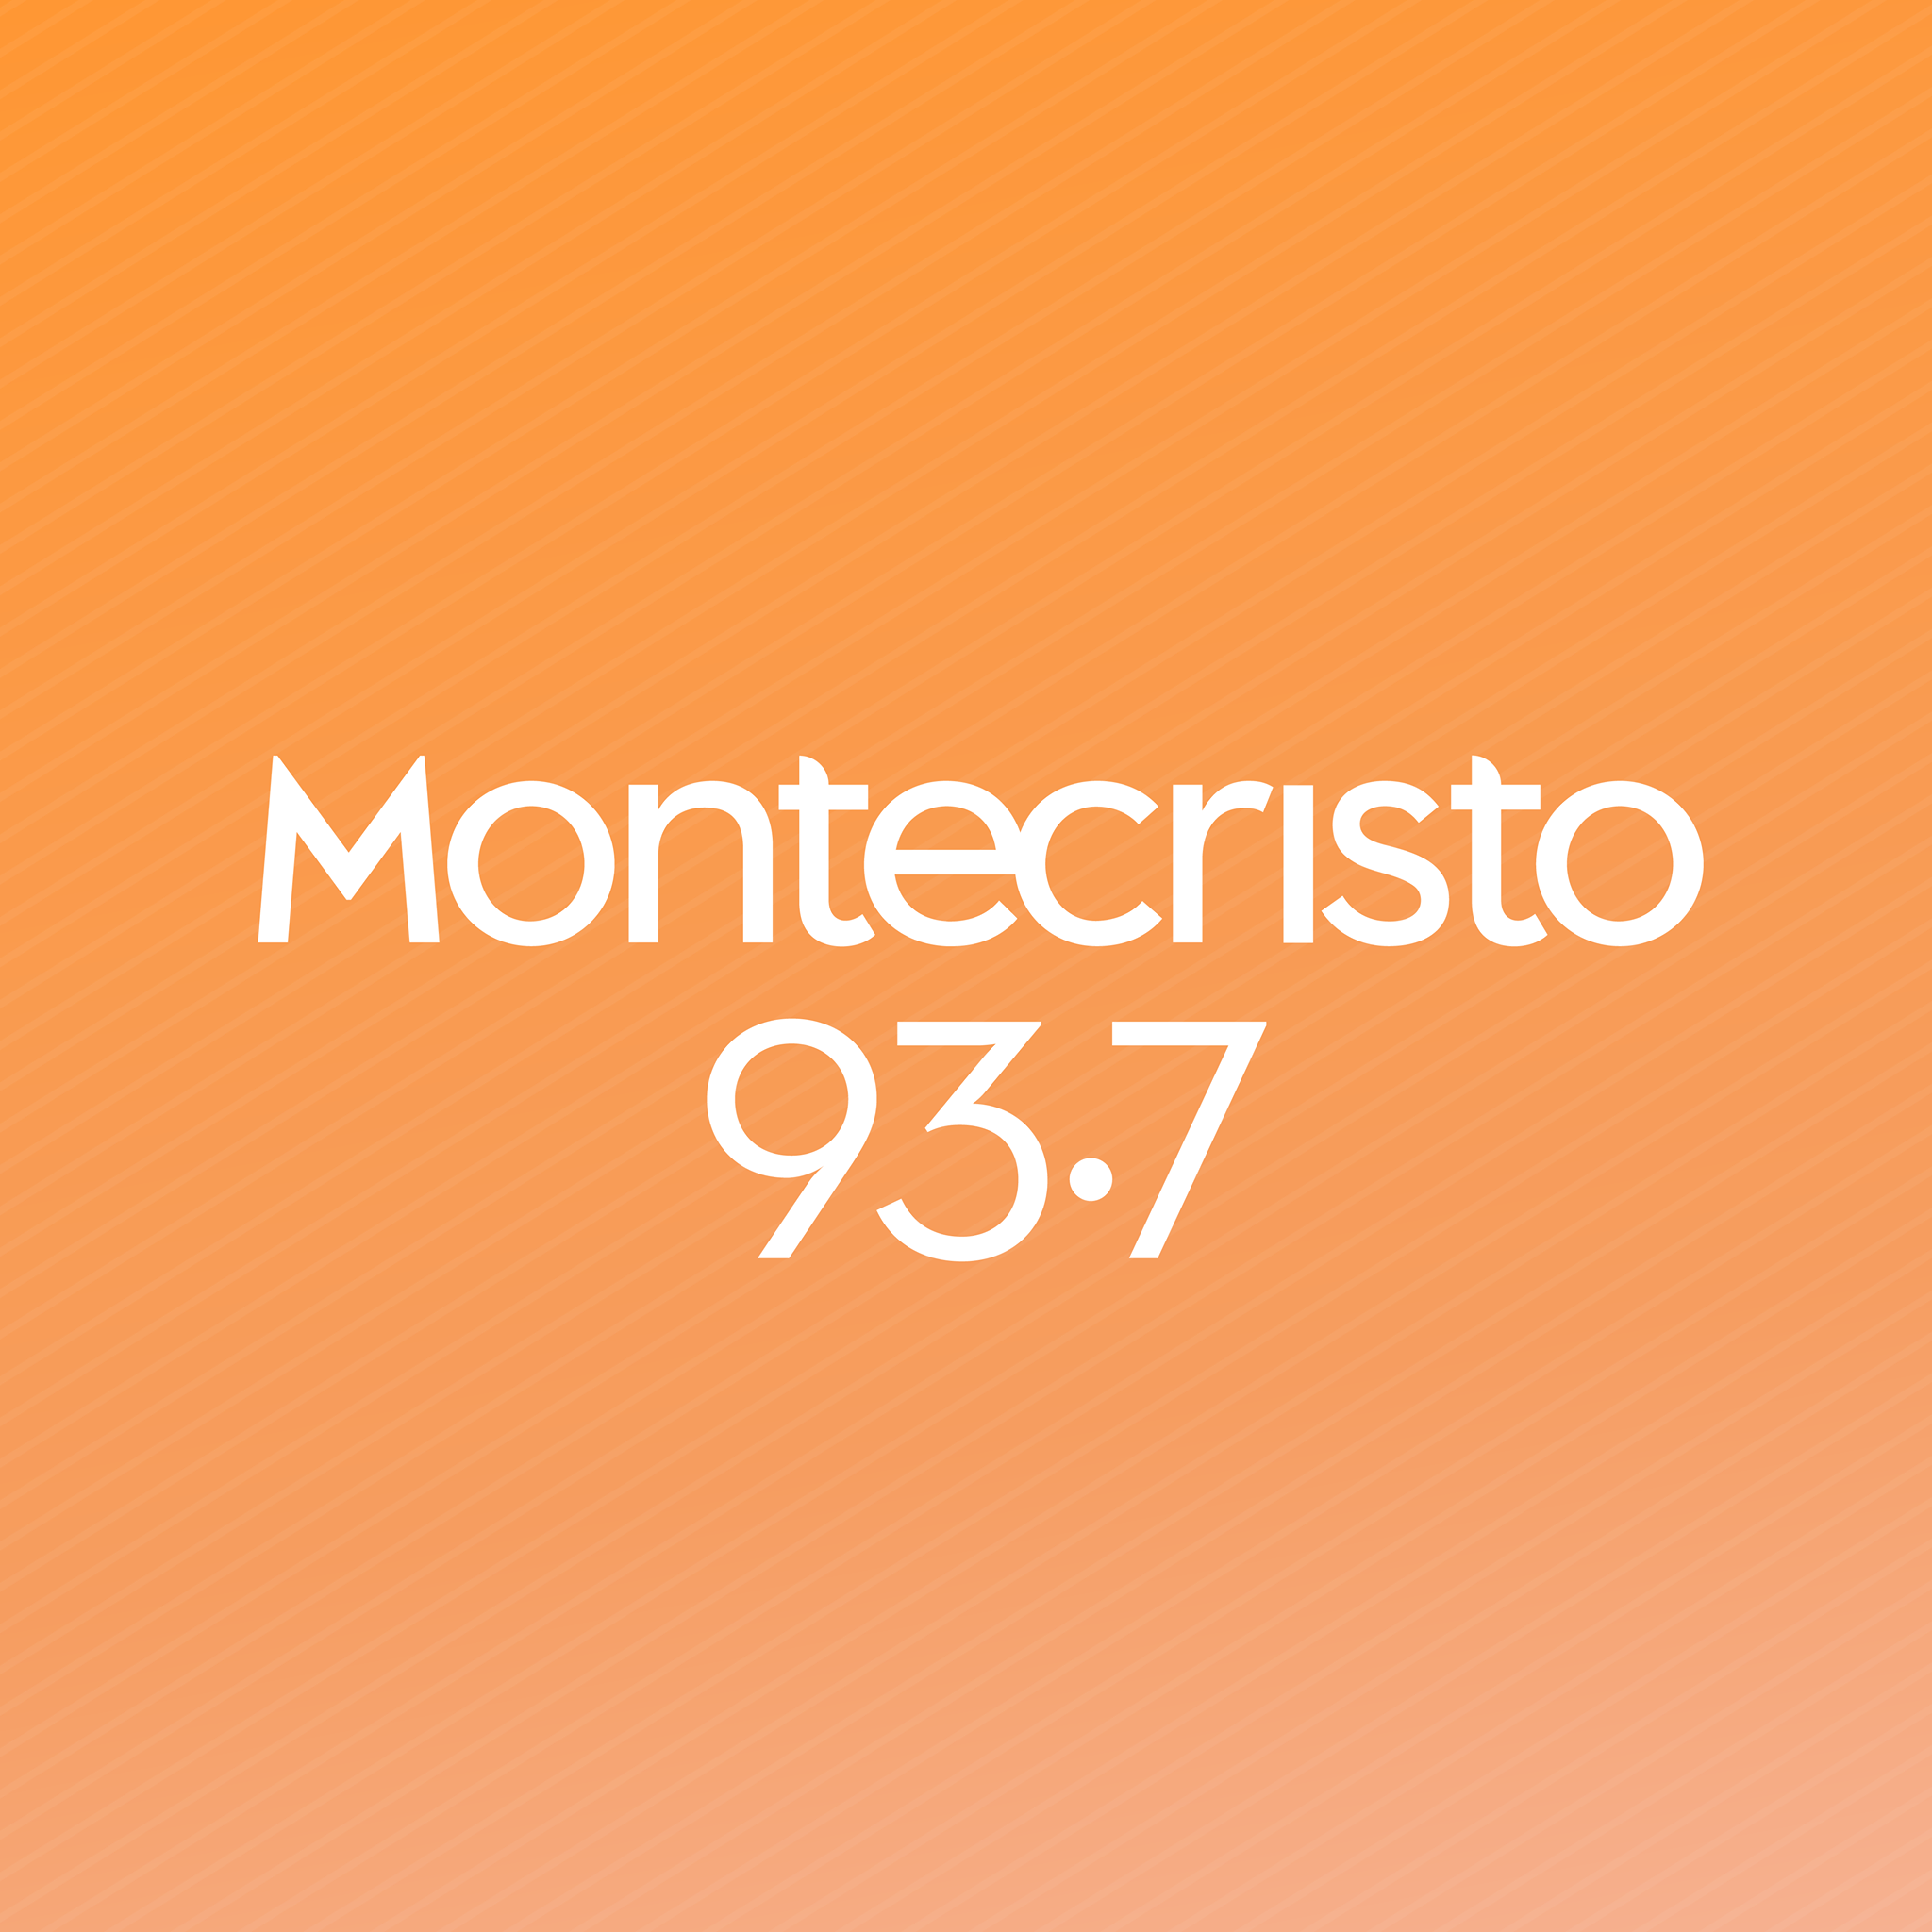 Montecristo 93.7